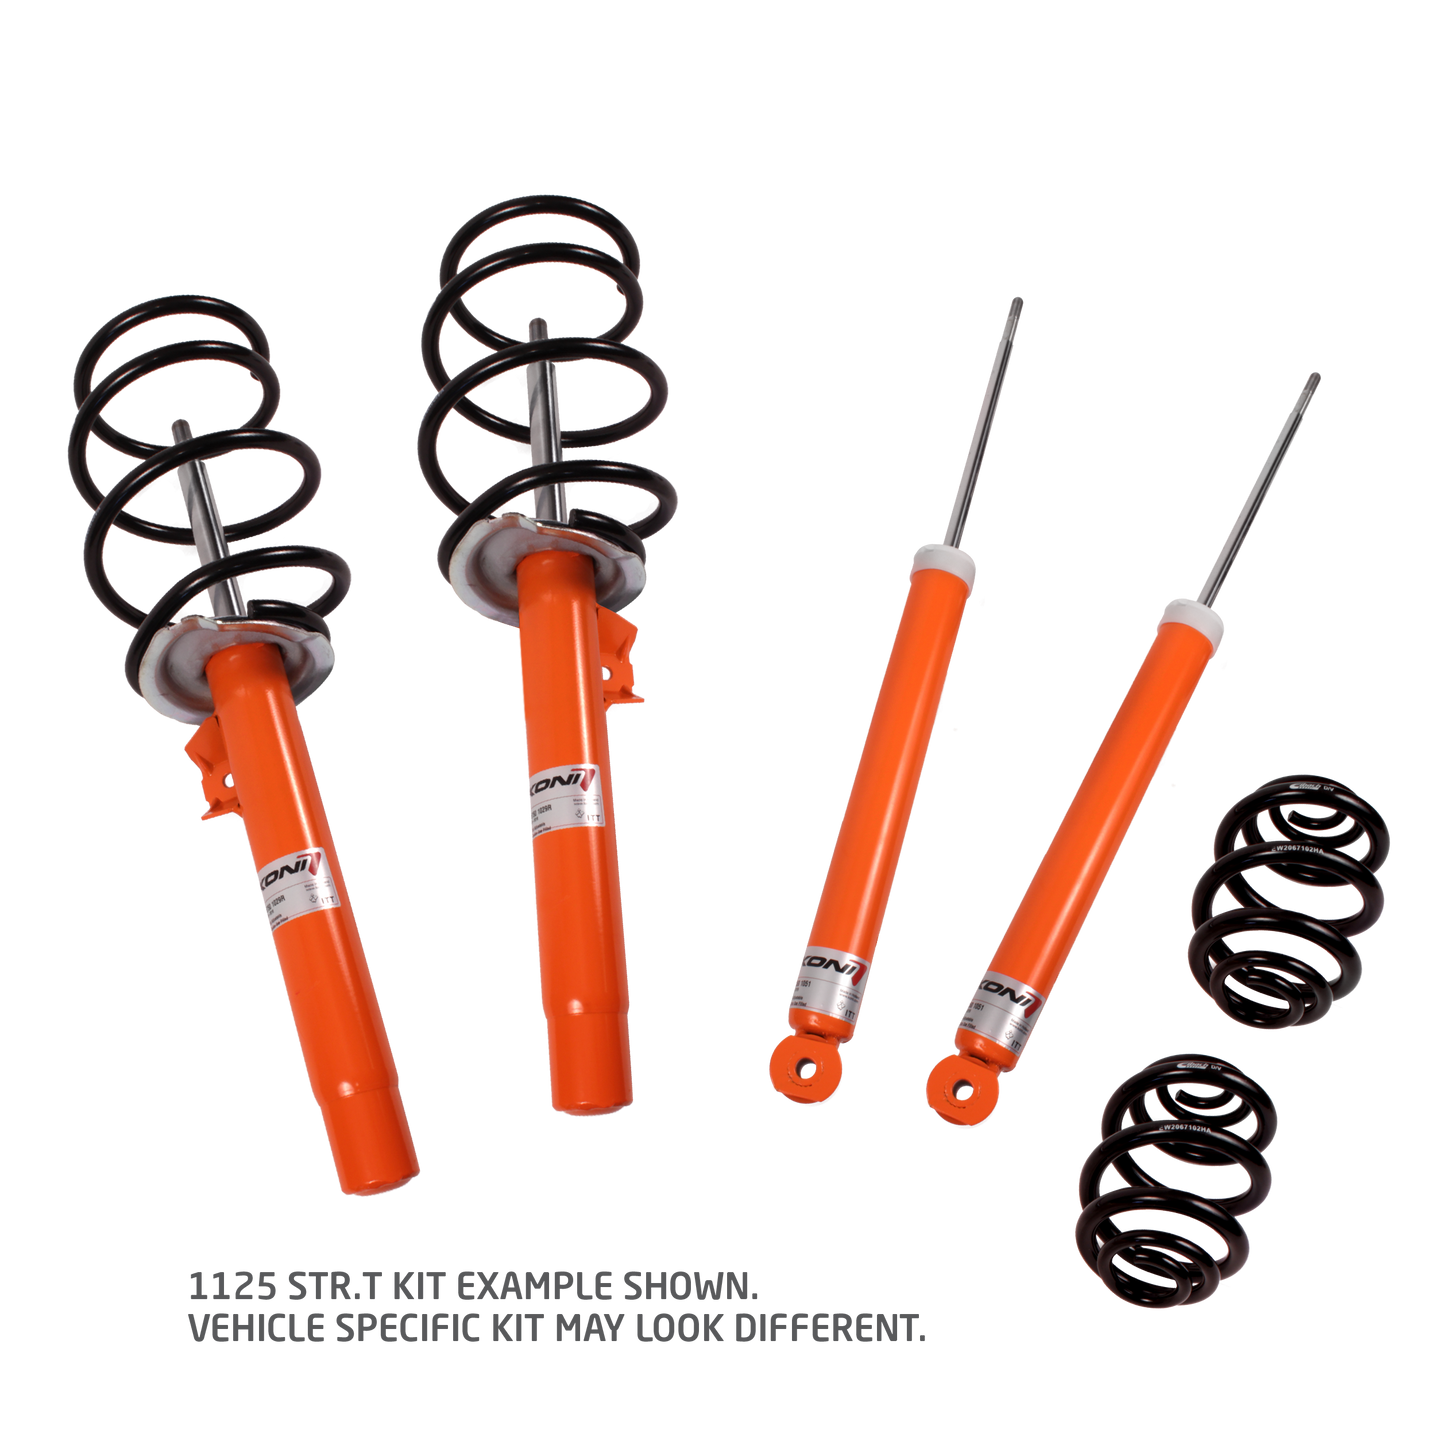 Koni - 1125 KONI STR.T/Eibach Kit- 4 STR.T (orange) dampers & 4 Eibach lowering springs 1125 1096